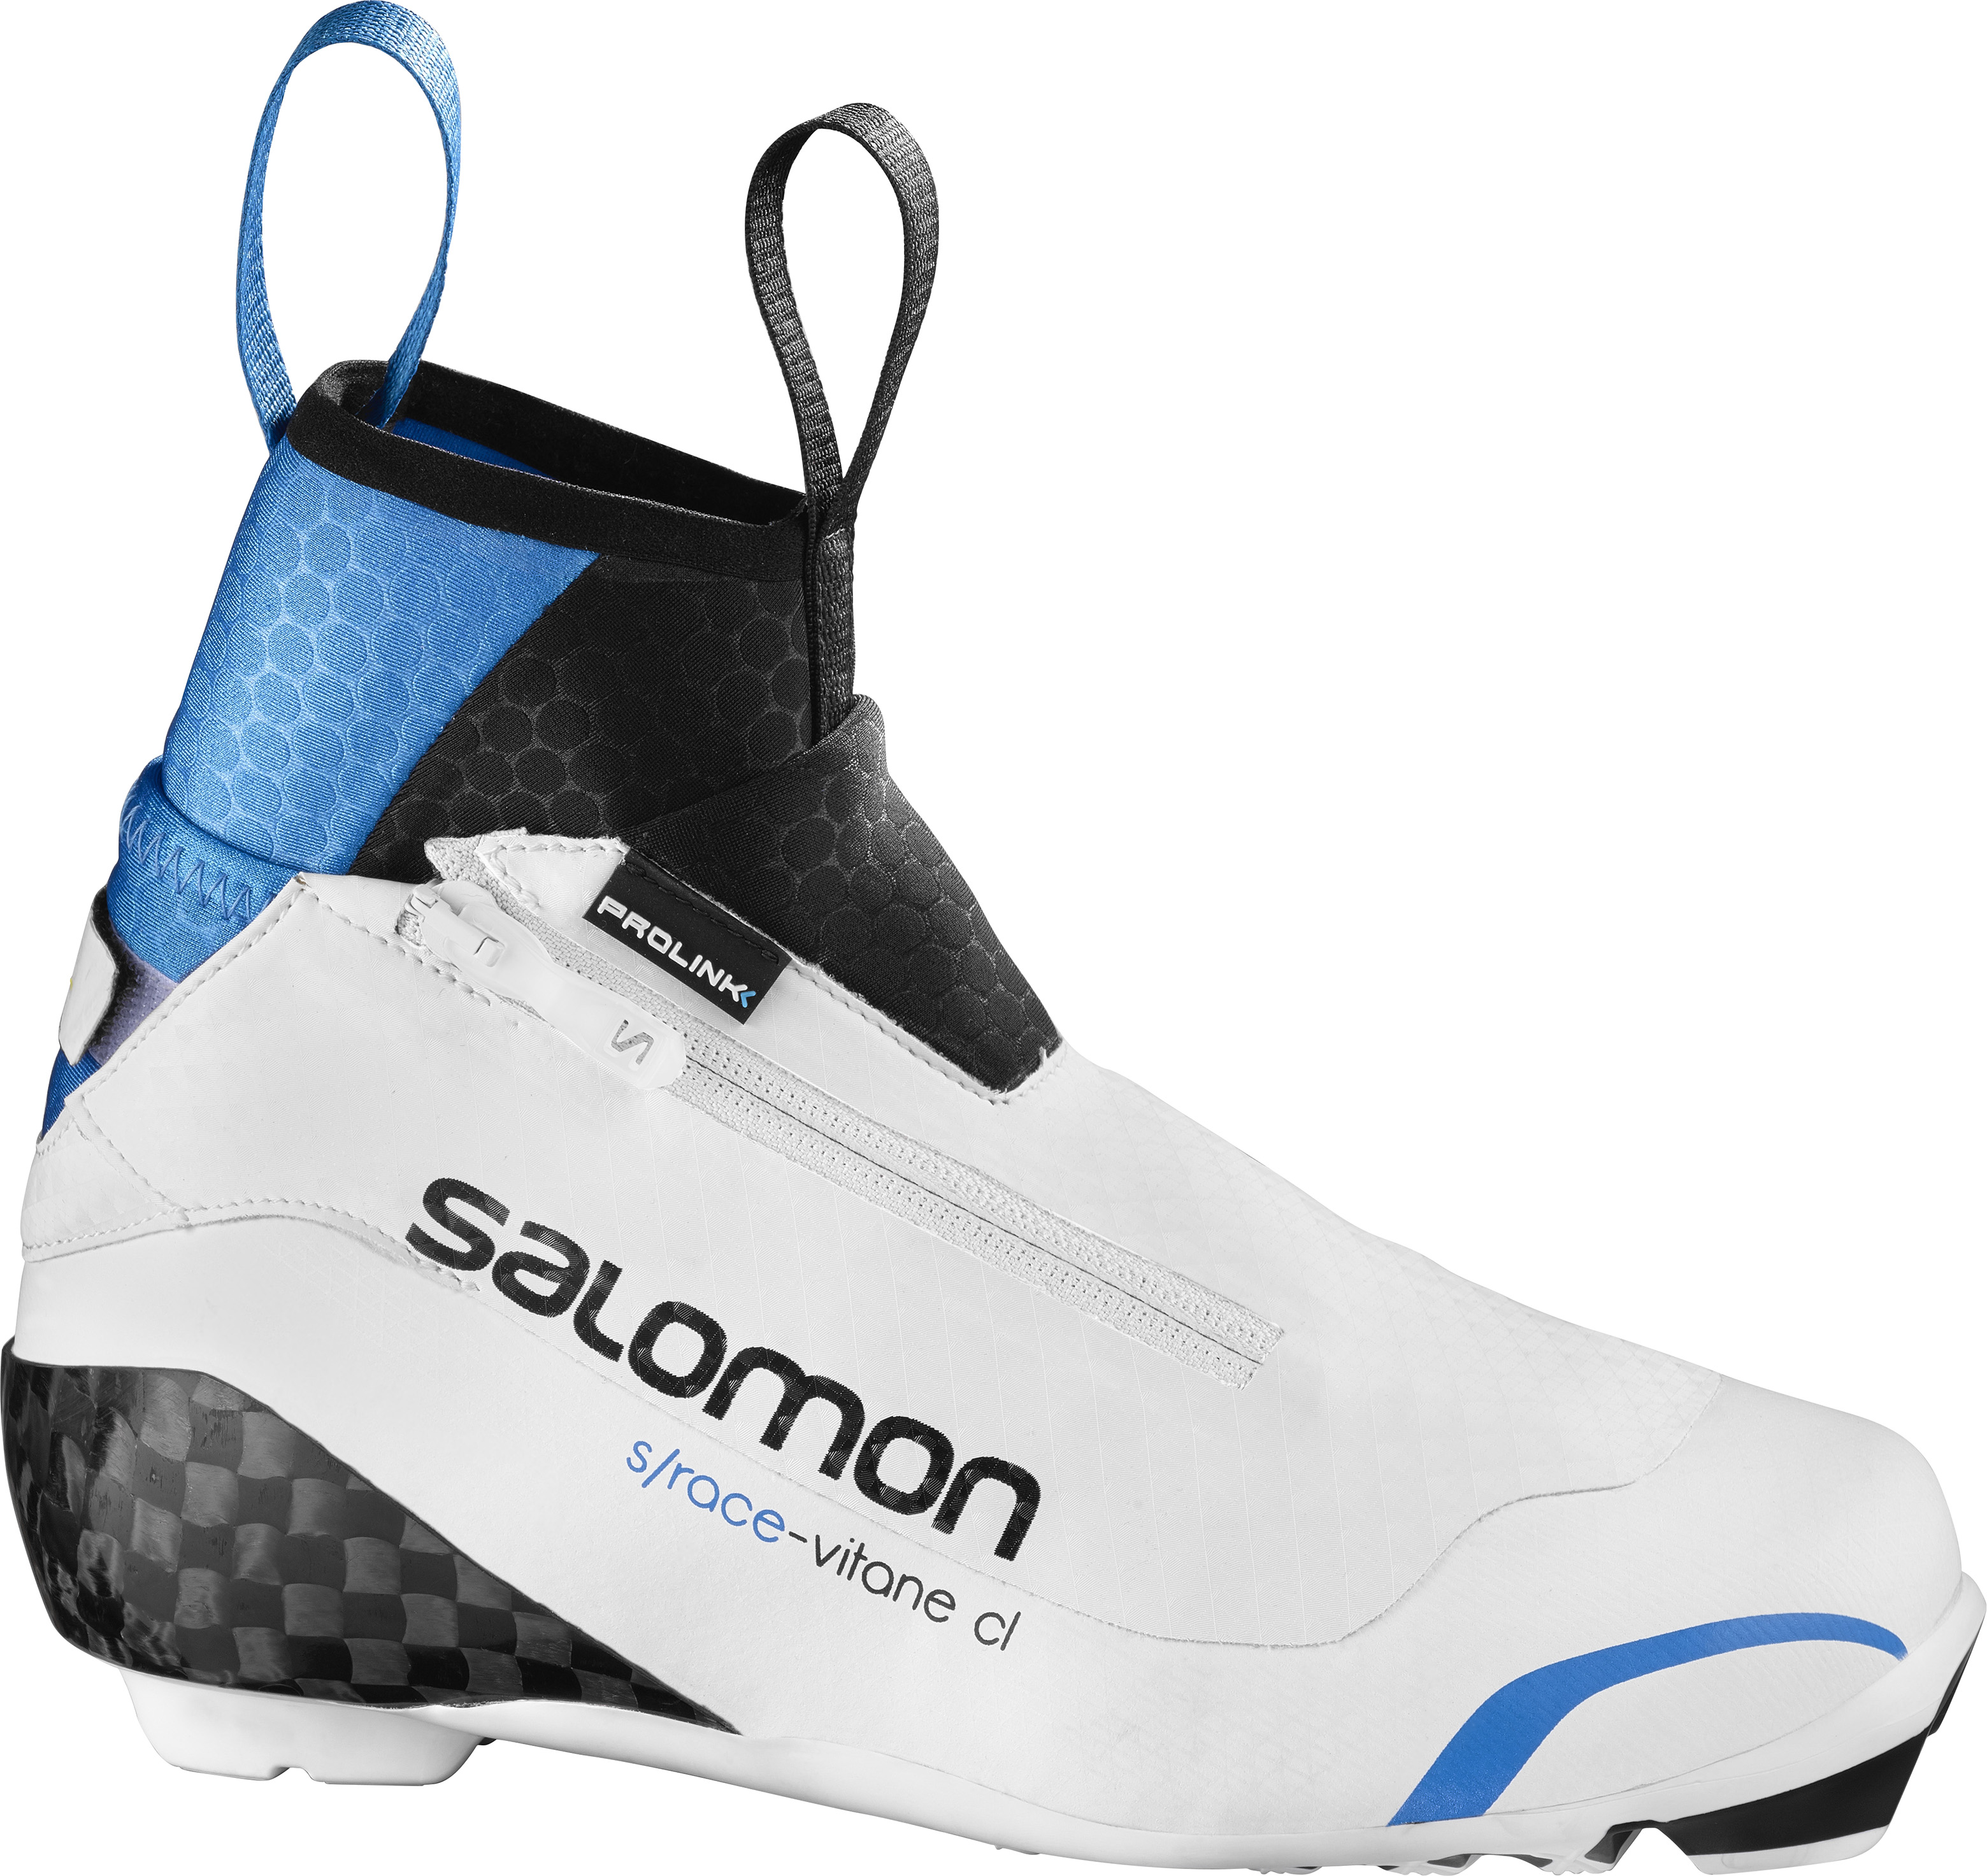 Salomon S-RACE VITANE CLASSIC Langlaufschuh